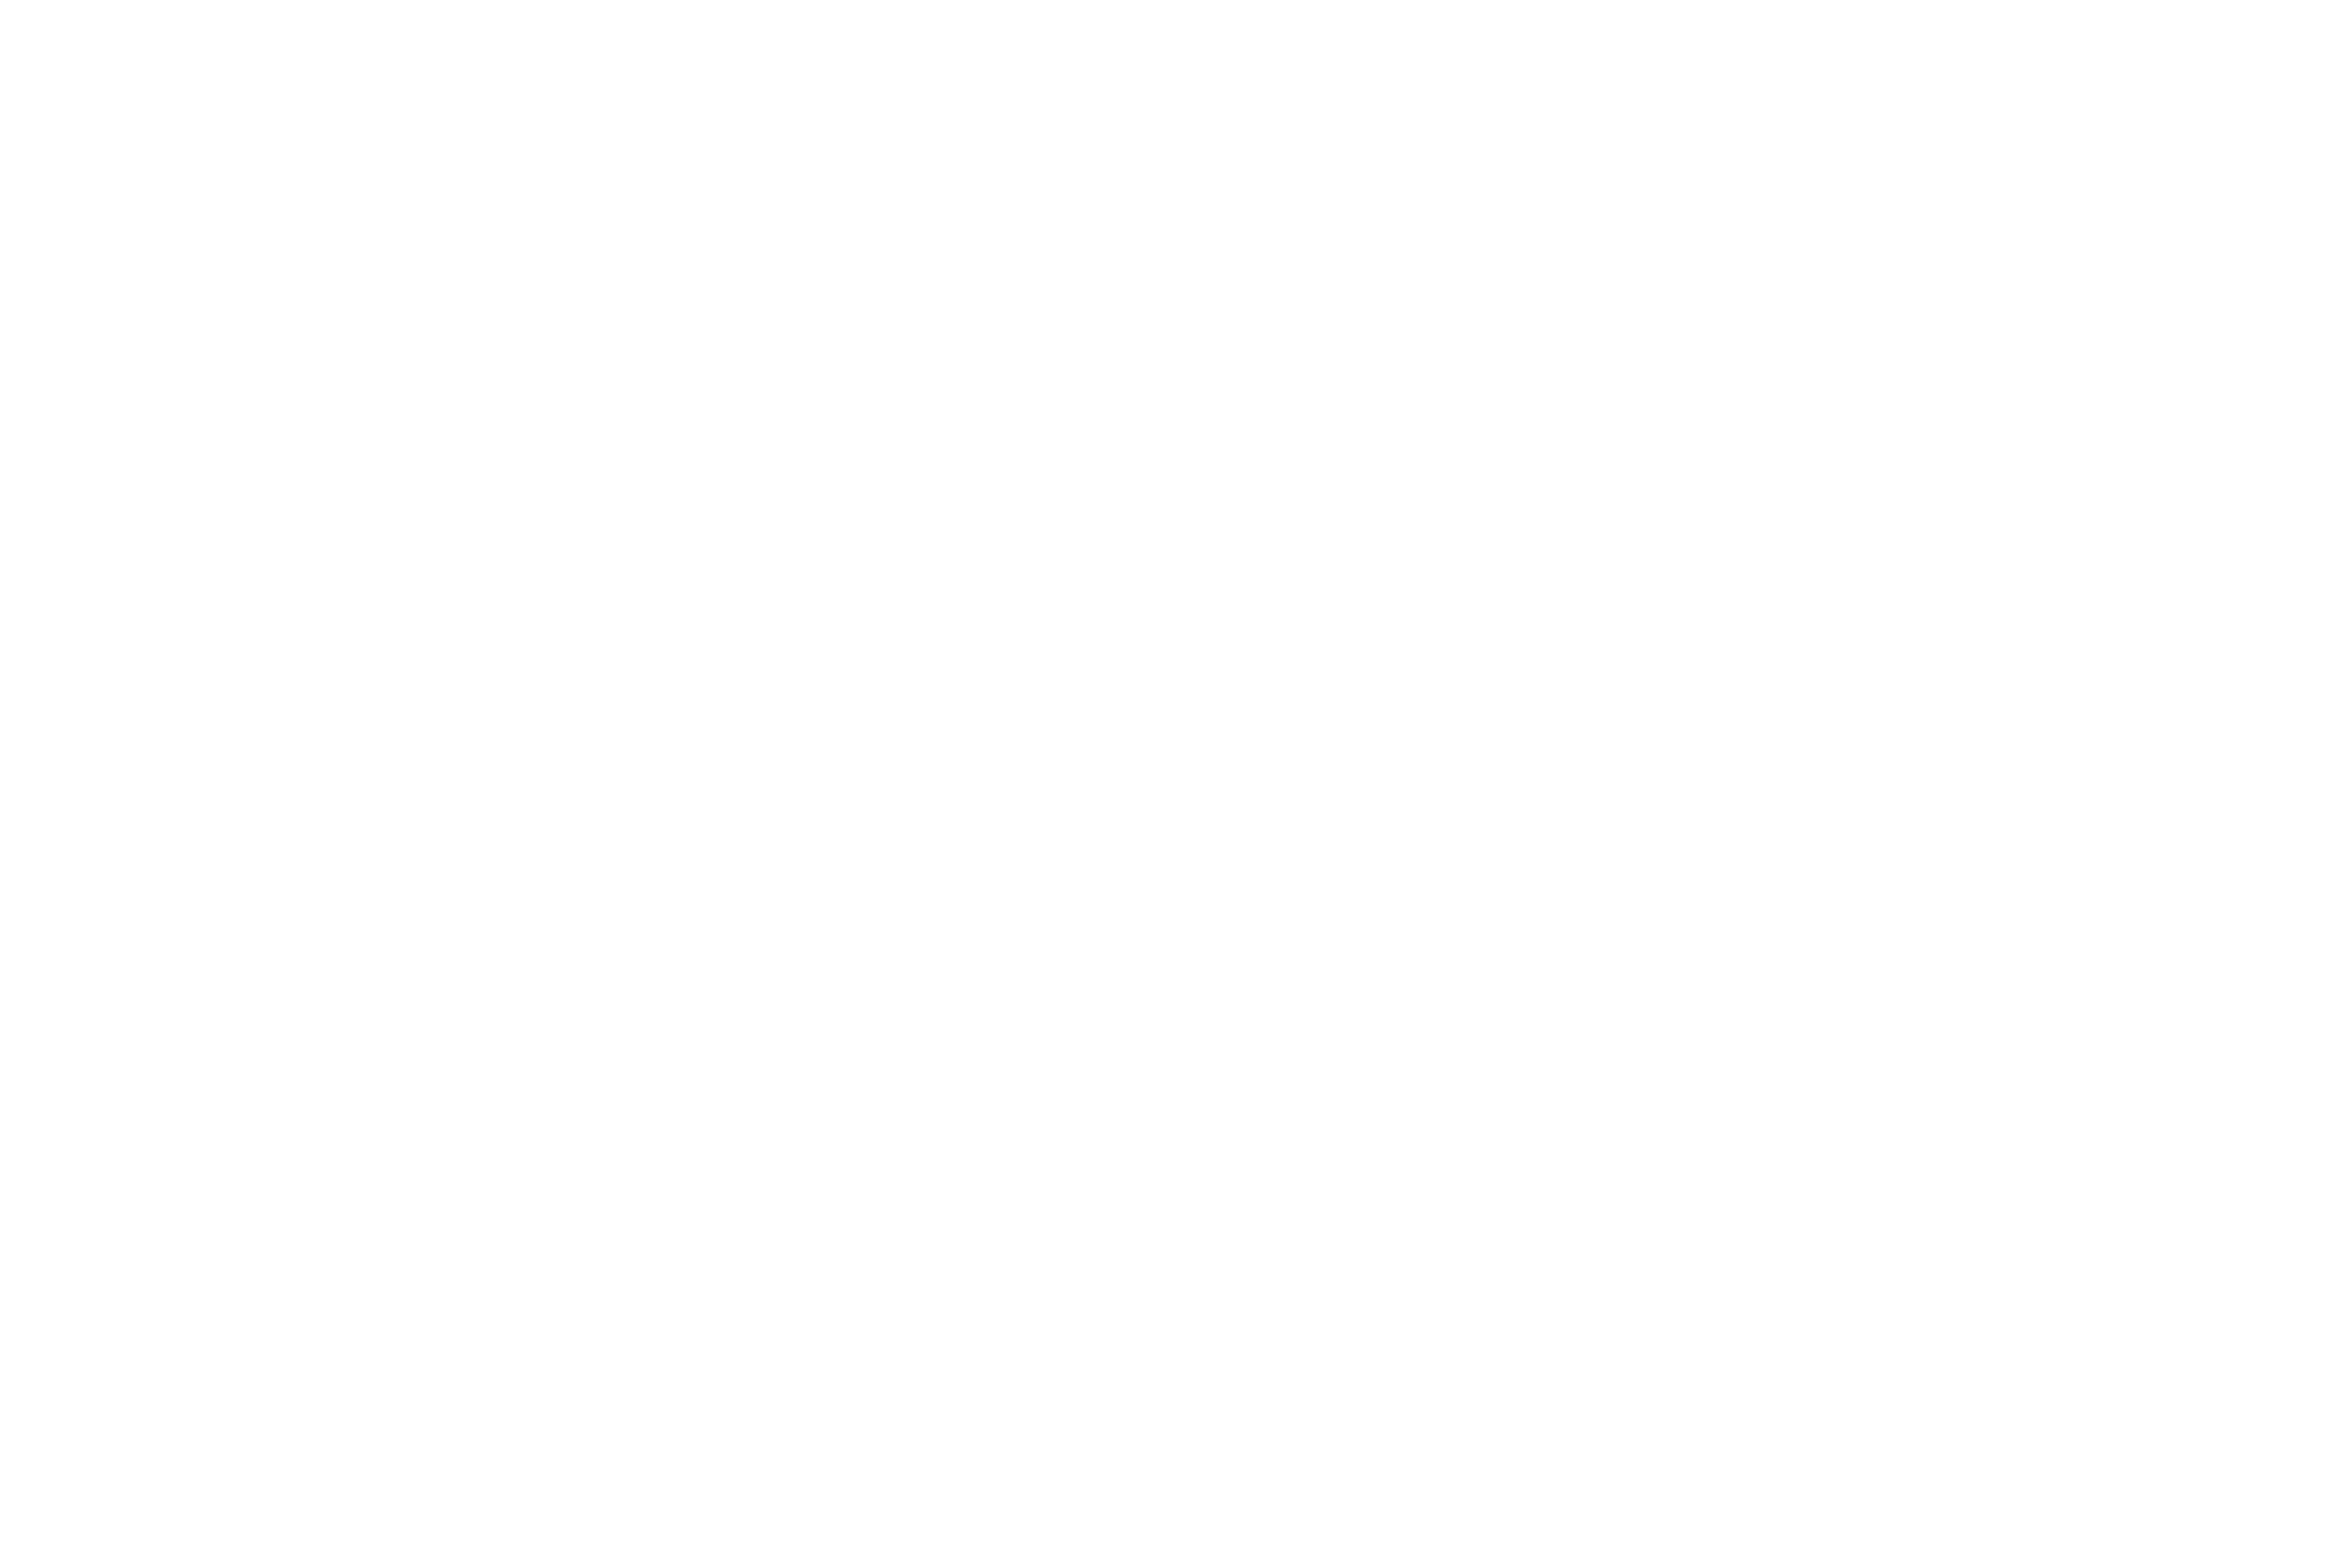 Virginia DAR